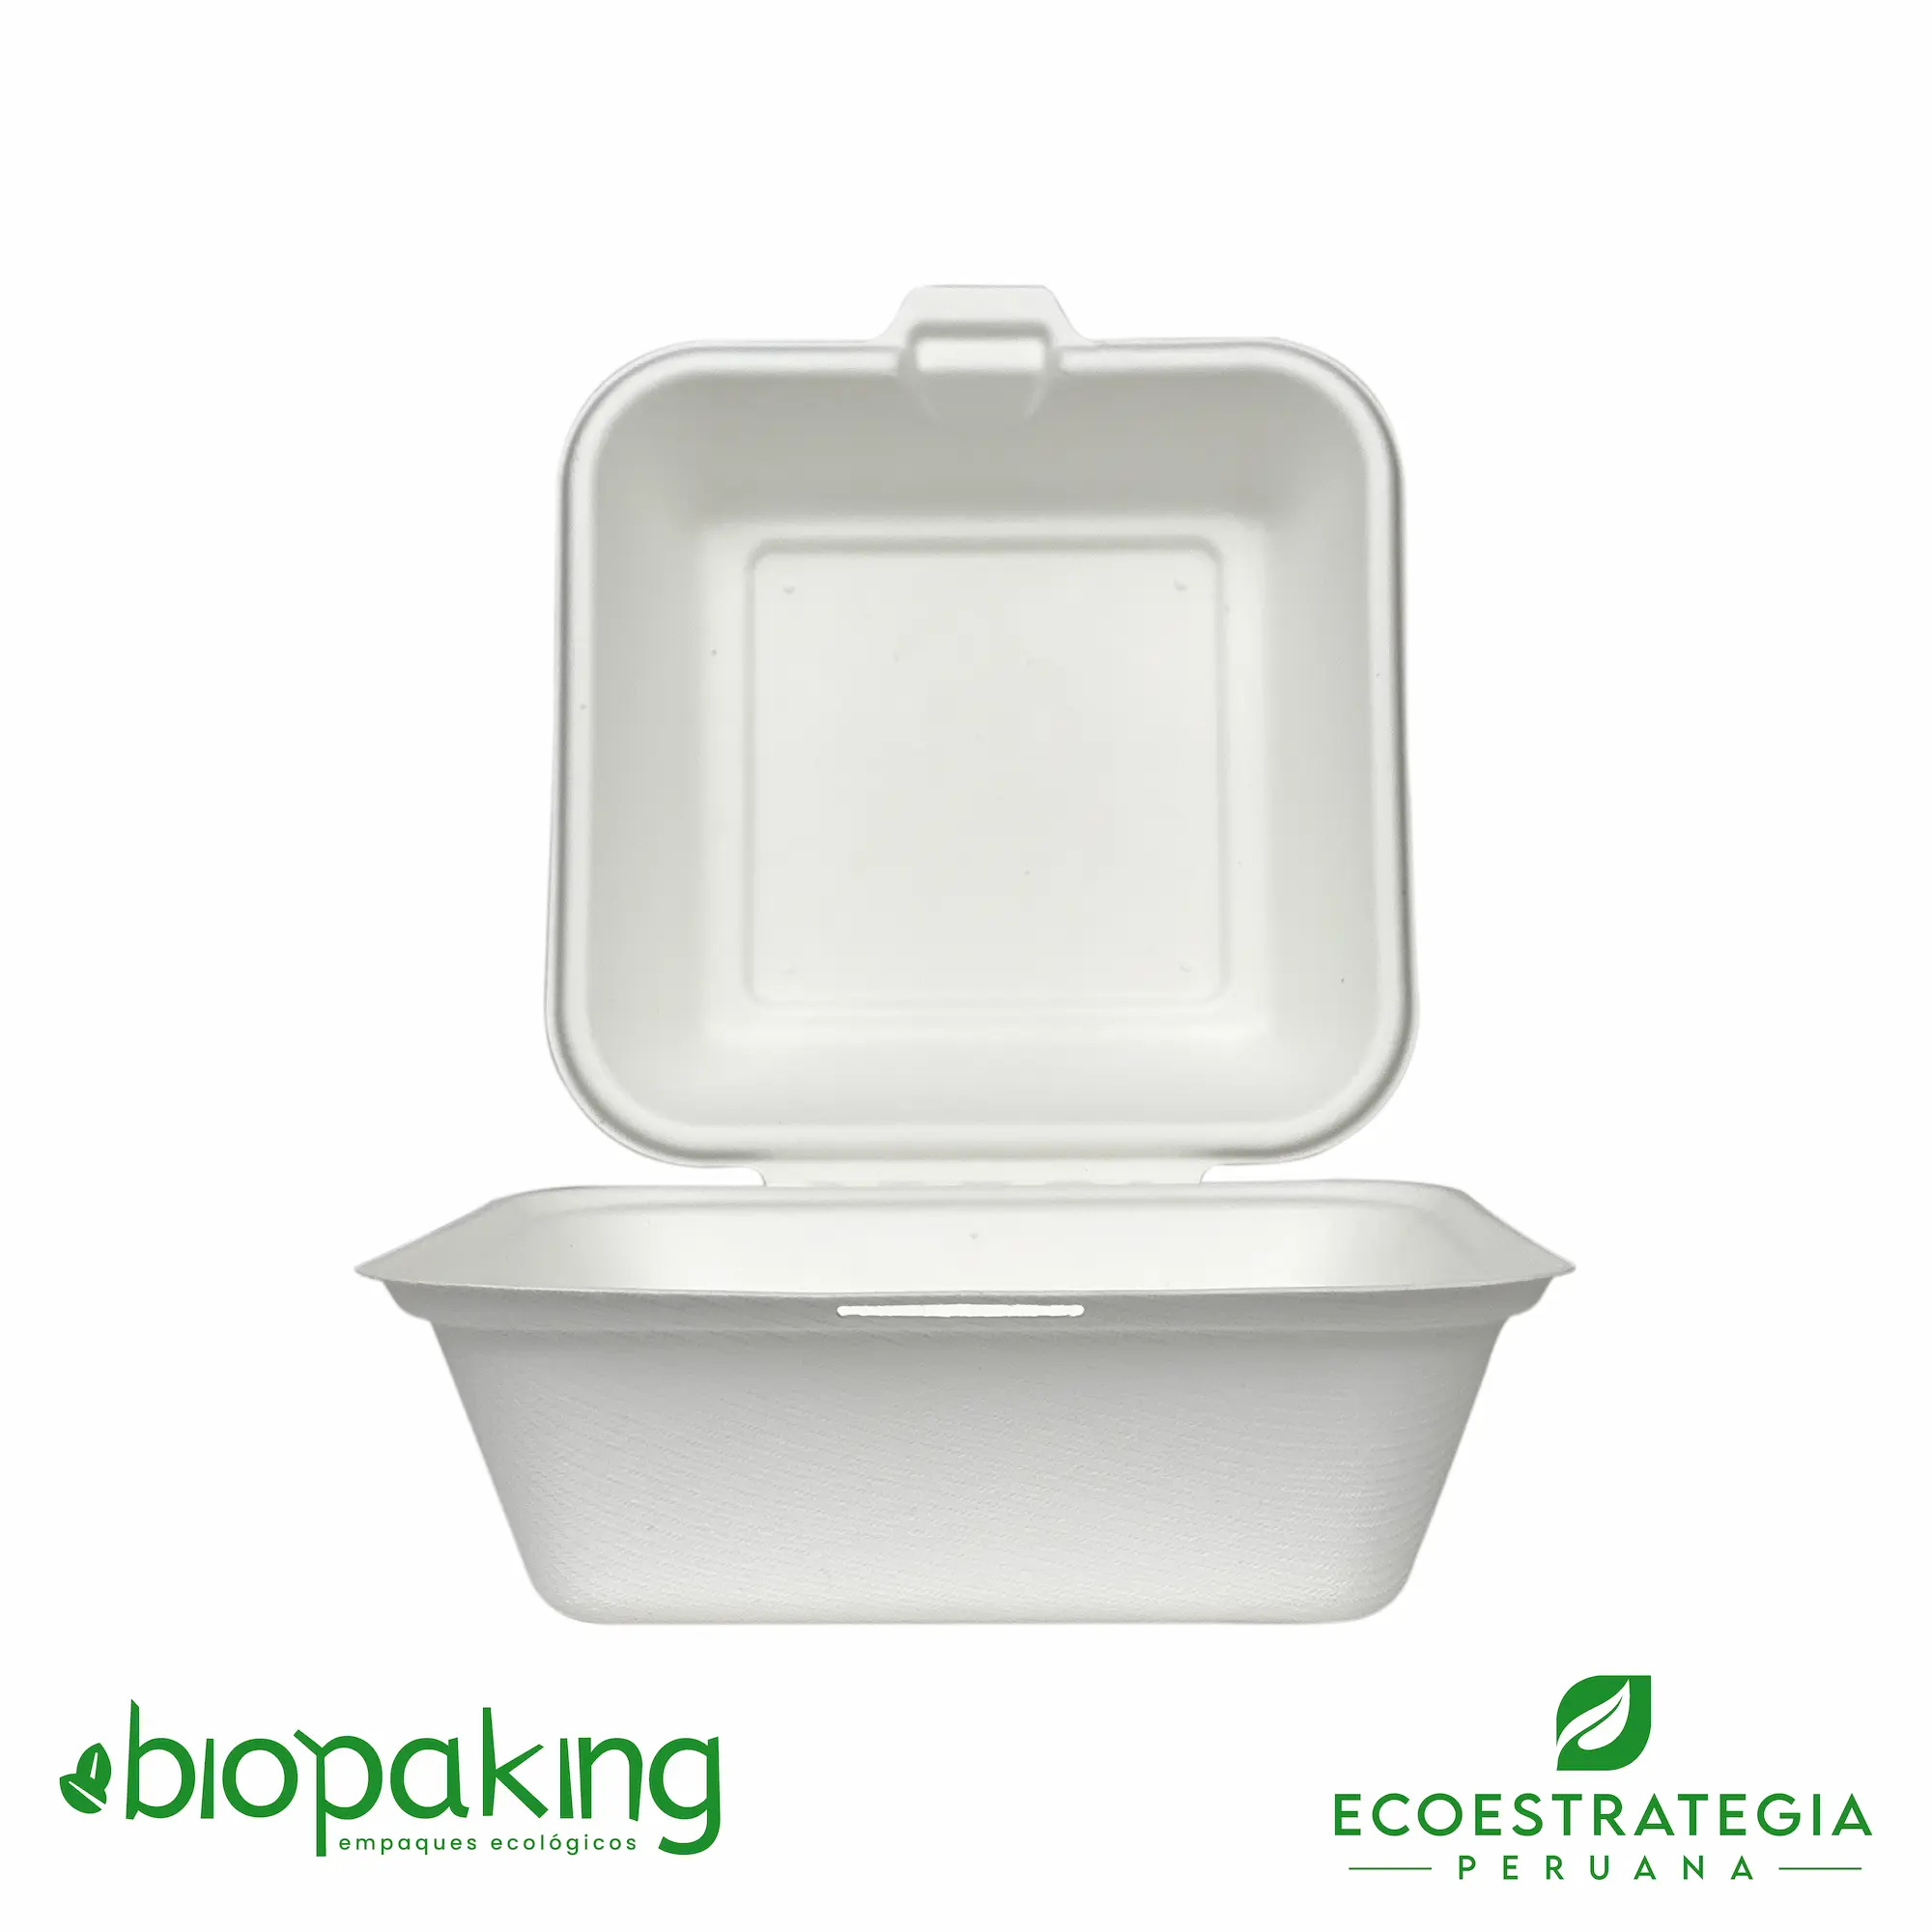 El envase biodegradable CT4 EP003 es ideal para alimentos como sopa, arroz, pasta, etc. Además es conocido como Ct4 biodegradable, fibra de caña ct4, envase biodegradable 6x6, envase para postres, envase biodegradable para hamburguesa, Contenedor 15x15x8 cm, Contenedor bisagra 6 x 6”, Contenedor cuadrado 450 ml, Clamshell biodegradable 500 ml, TP-001(CT4), B003, CLM-P-HB06, FBOX6X6, EBX6, Contenedor 4 bioform fibra-ks bagazo caña, CBX15, Envase 6x6” Pulpa Caña de azúcar, Tapper ct4 biodegradable 16 x16, Contenedor burguer 450 ml (ct4), contendor eco 450 us (15x15cm) fibra de caña, envase de cartón biodegadable ct4, envases biodegradables Perú, envases biodegradables lima, envases biodegradables peru, envases de cartón biodegradables, contenedores de cartón biodegradables ct4, box pequeño, contenedor ct6, envase biodegradable de 6”, envase ct4, contenedor 4 fibra, 6x6 envase de hamburguesa, v4, taper ct4, envases biodegradables ct4 economico, taper biodegradable ct4, importadores de envases biodegradable ct4, distribuidores ct4 biodegradable, mayoristas ct4 biodegradable